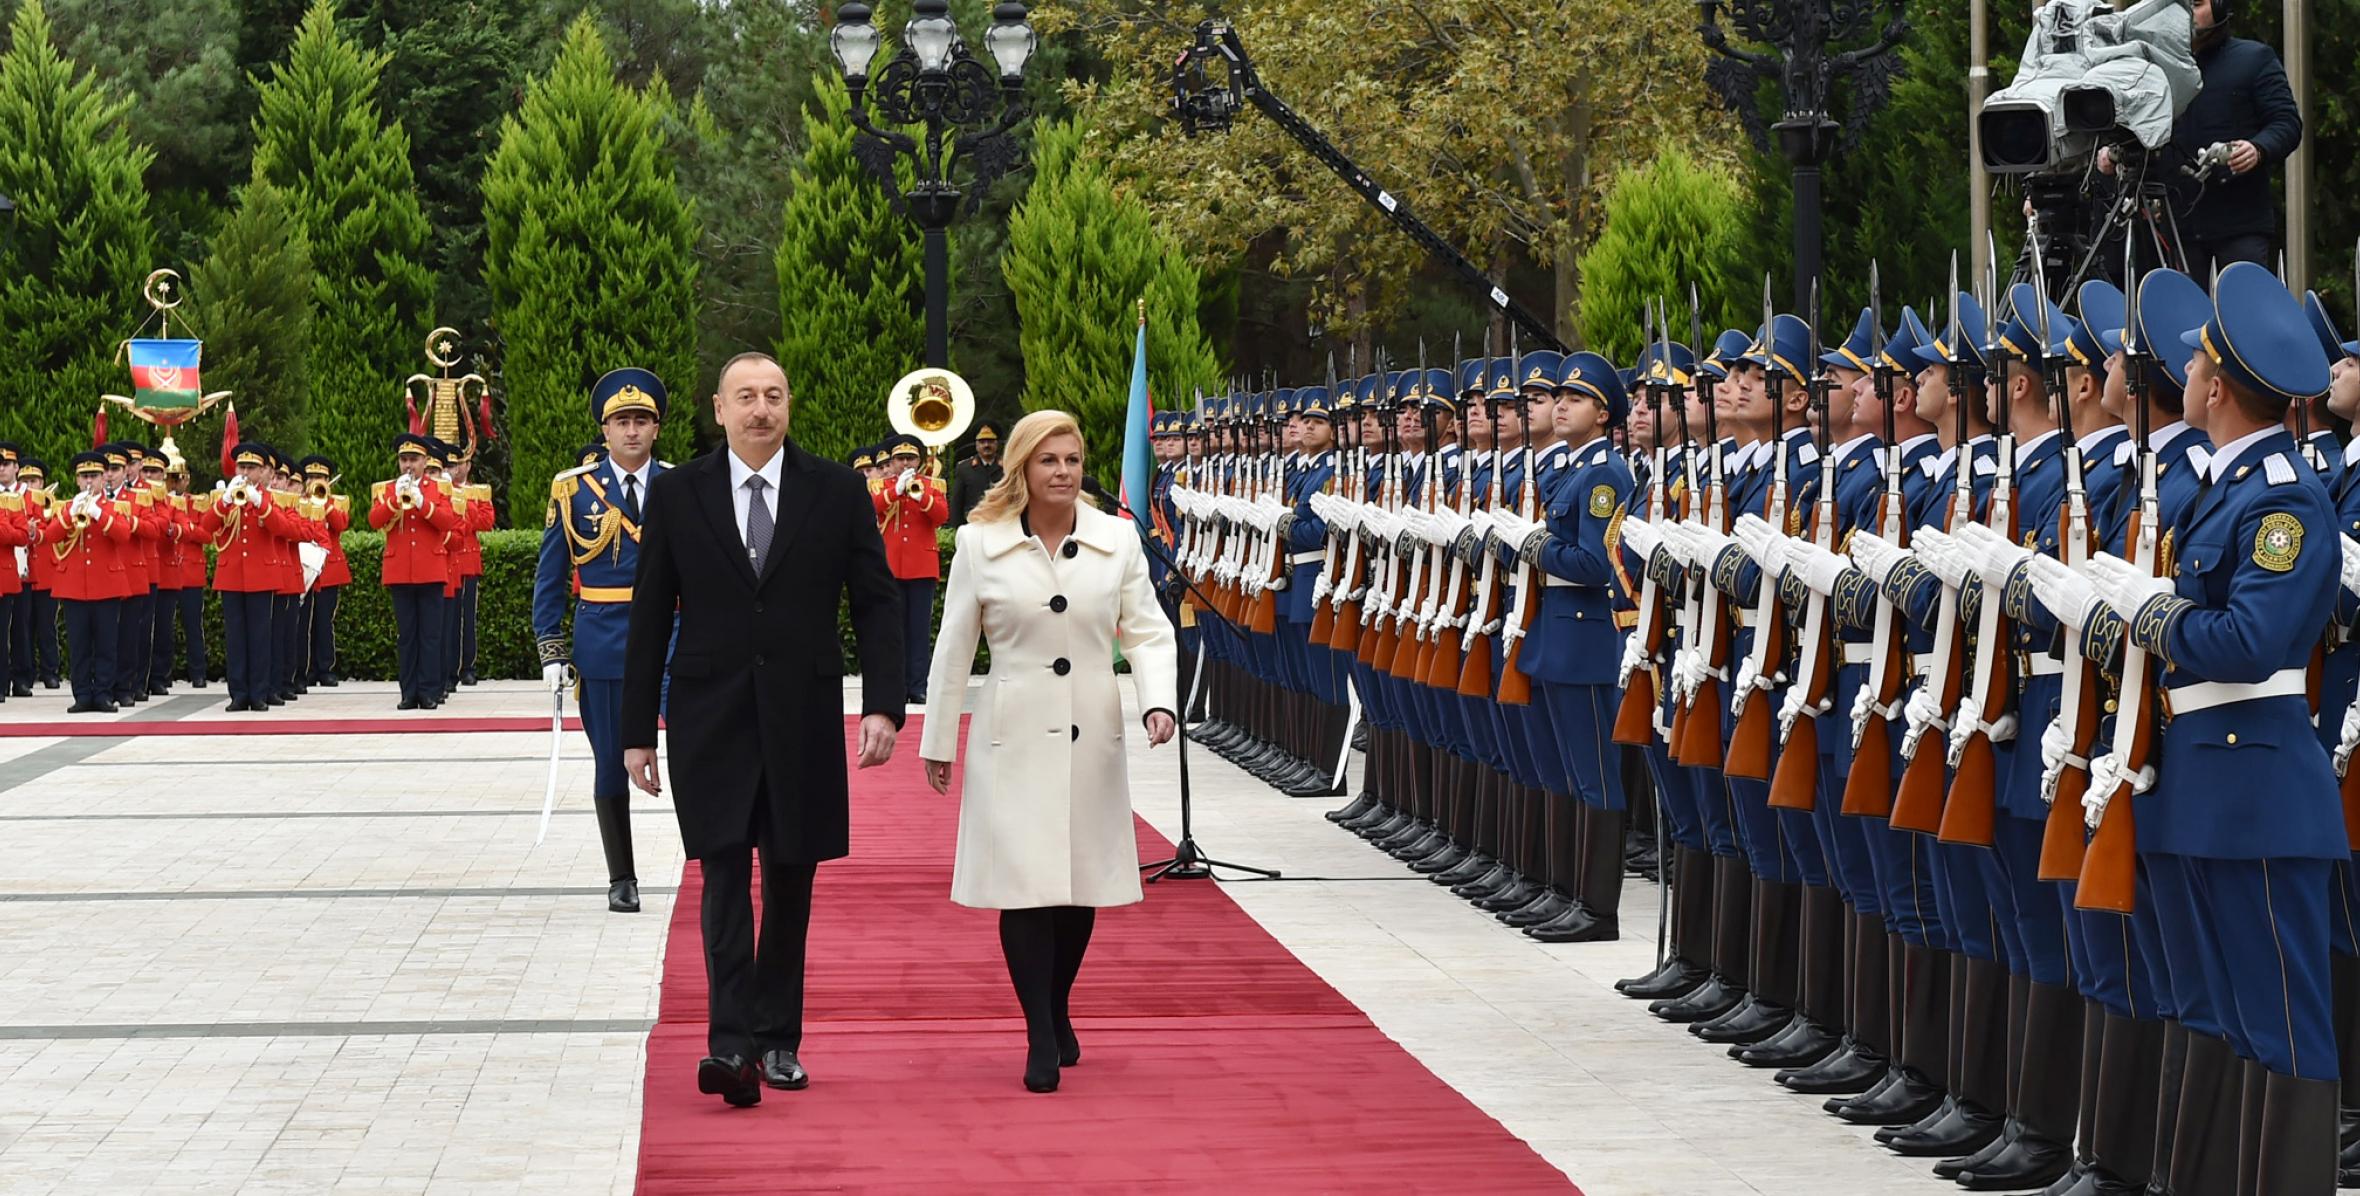 Official welcoming ceremony was held for Croatian President Kolinda Grabar-Kitarovic